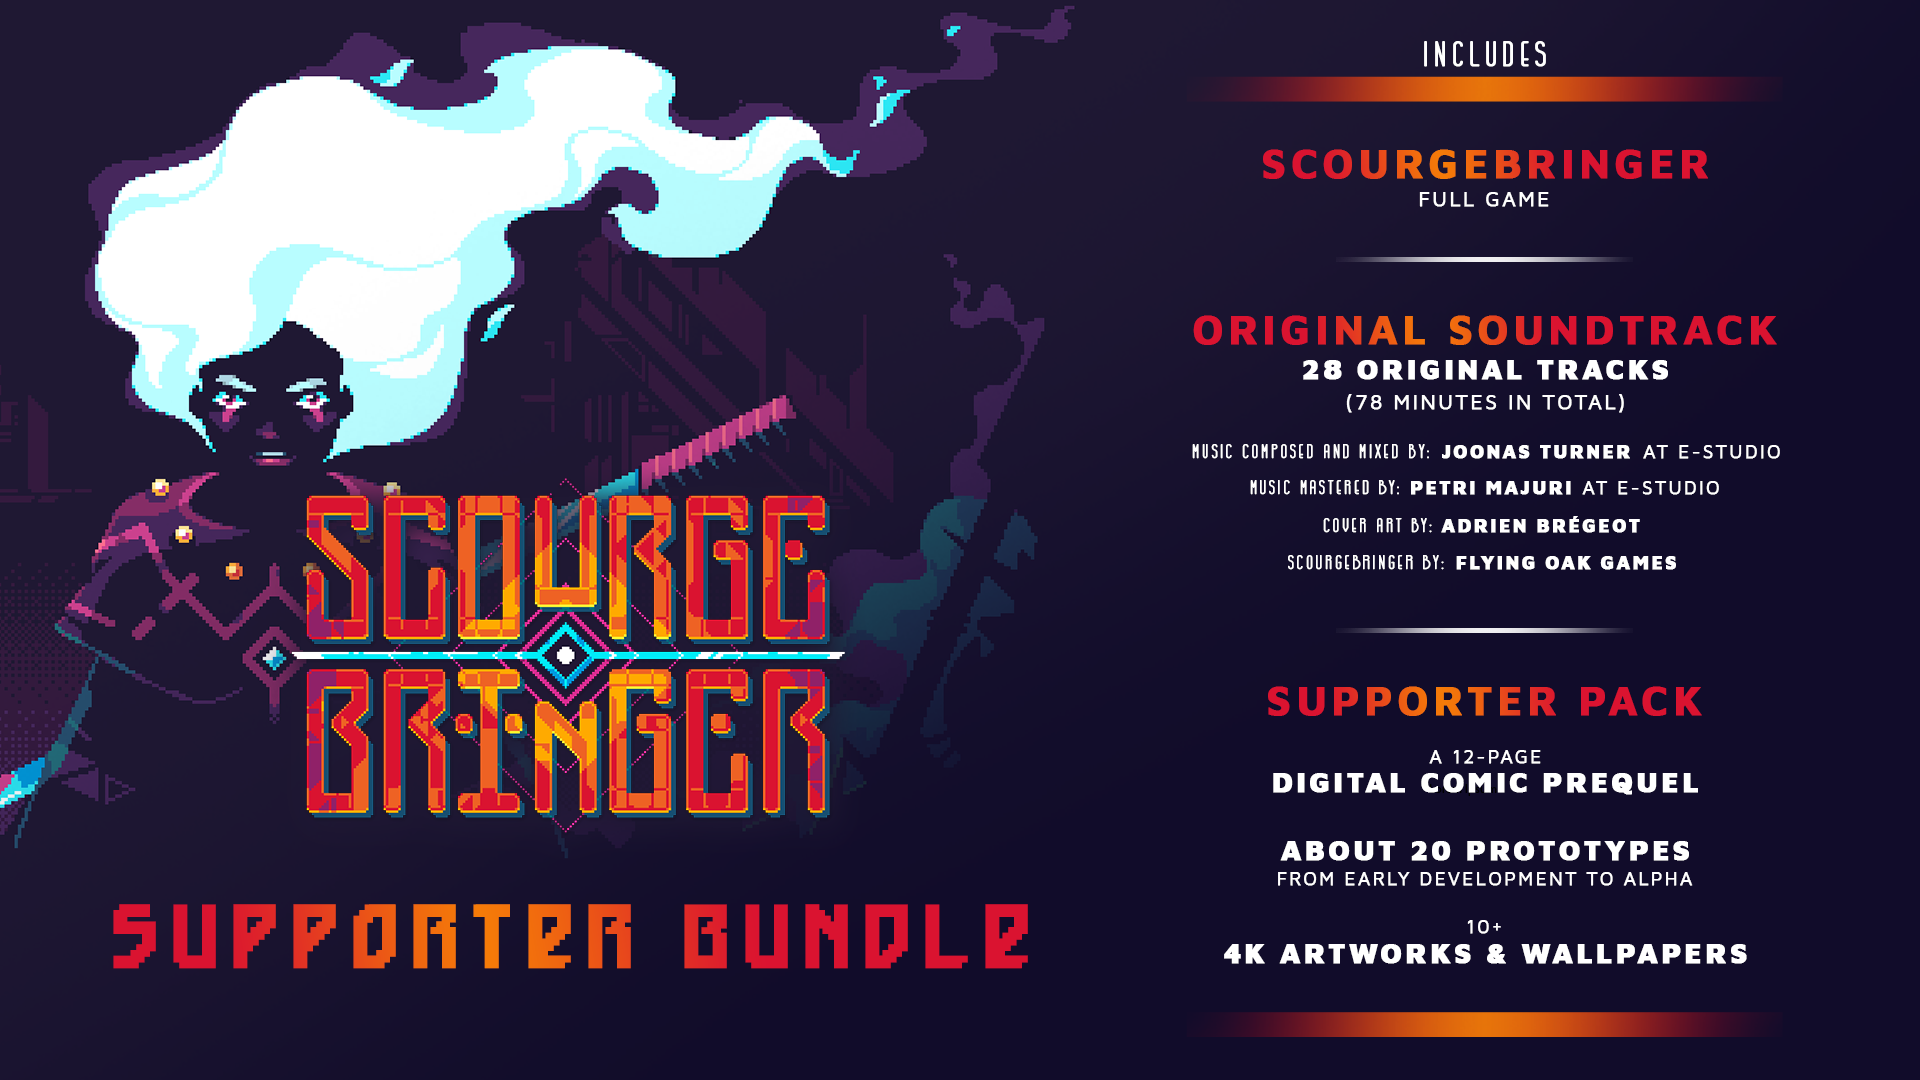 New trailer and bonus content for ScourgeBringer news